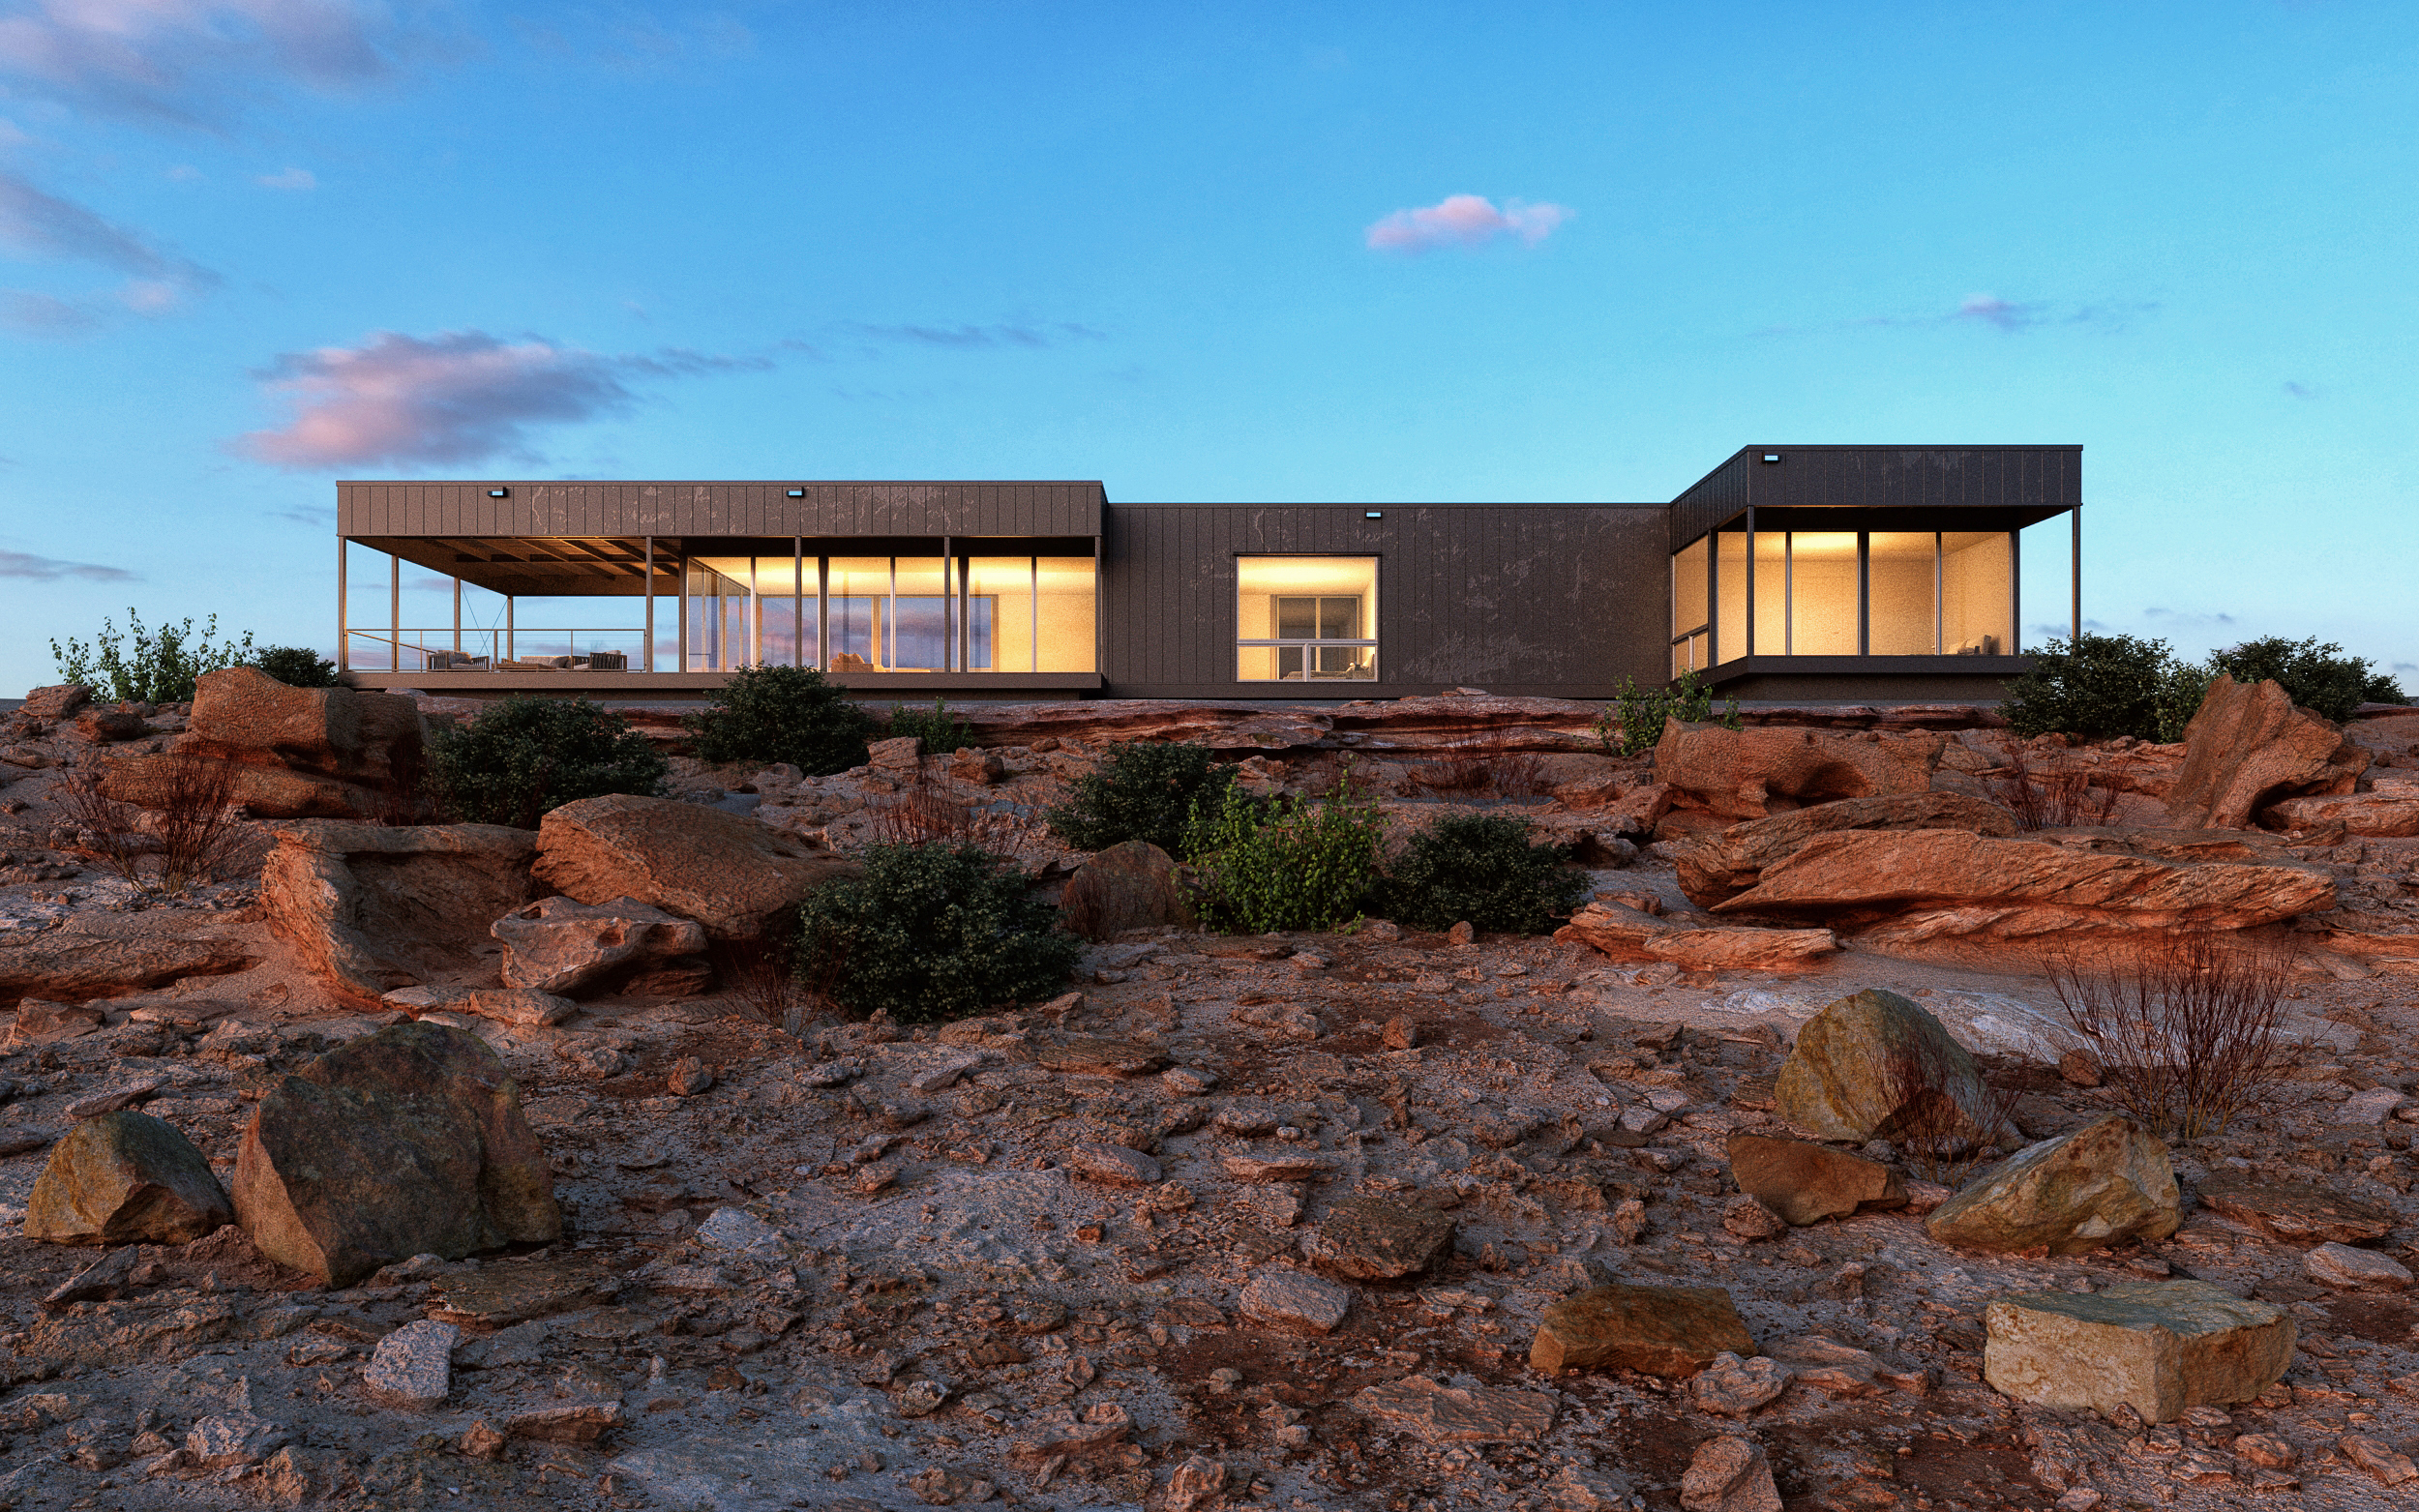 Desert house in 3d max vray 3.0 image